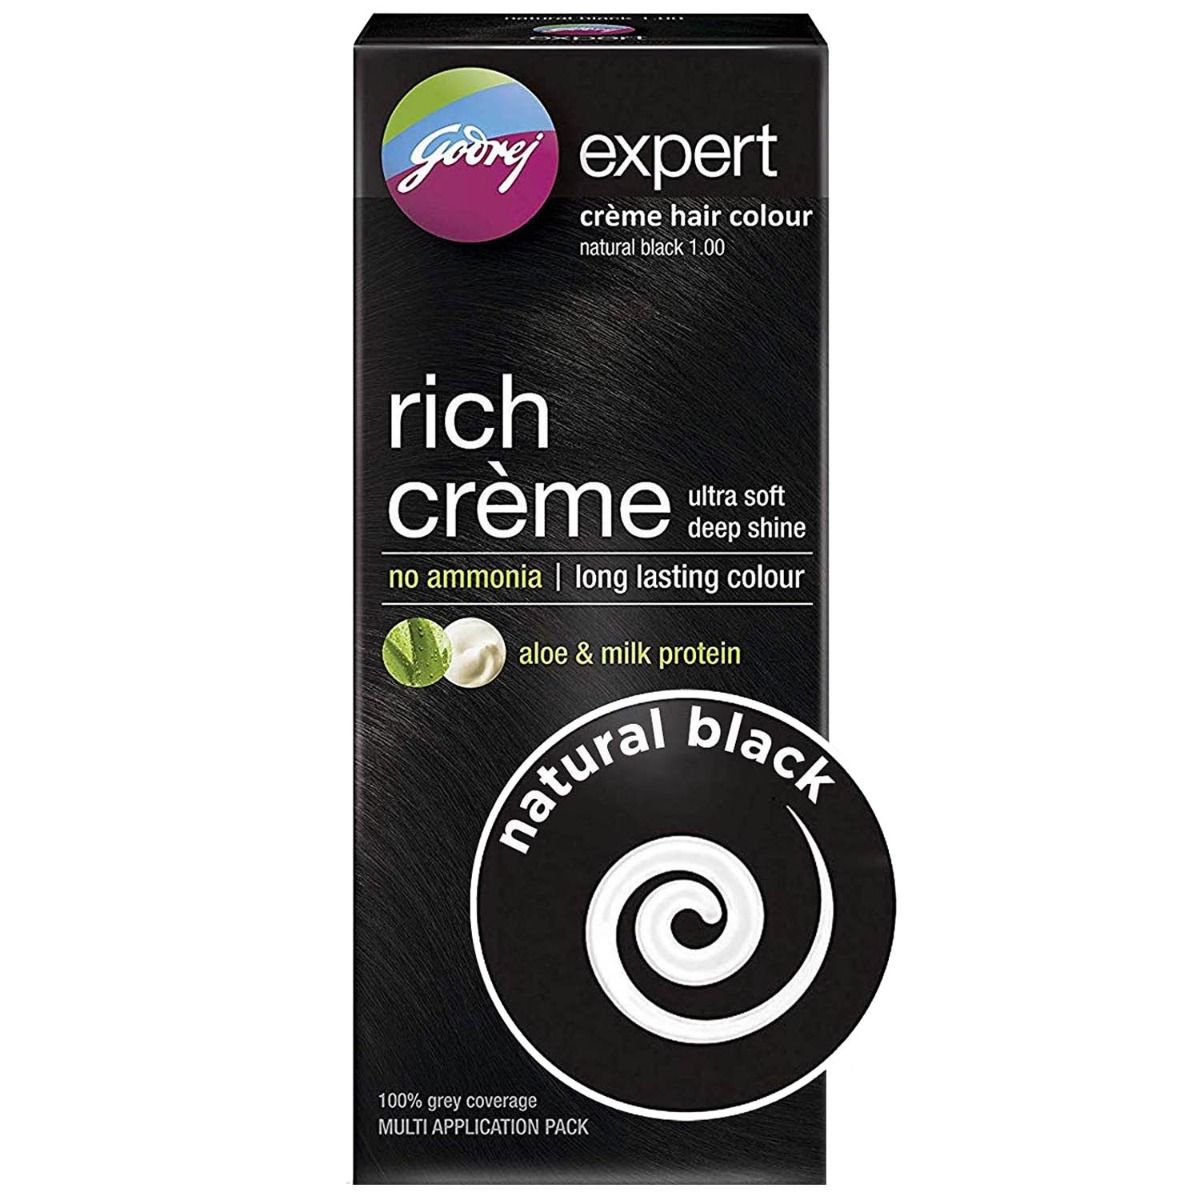 Godrej Expert Rich Creme Shade 1.0 Hair Color, Natrual Black, 50 gm, Pack of 1 